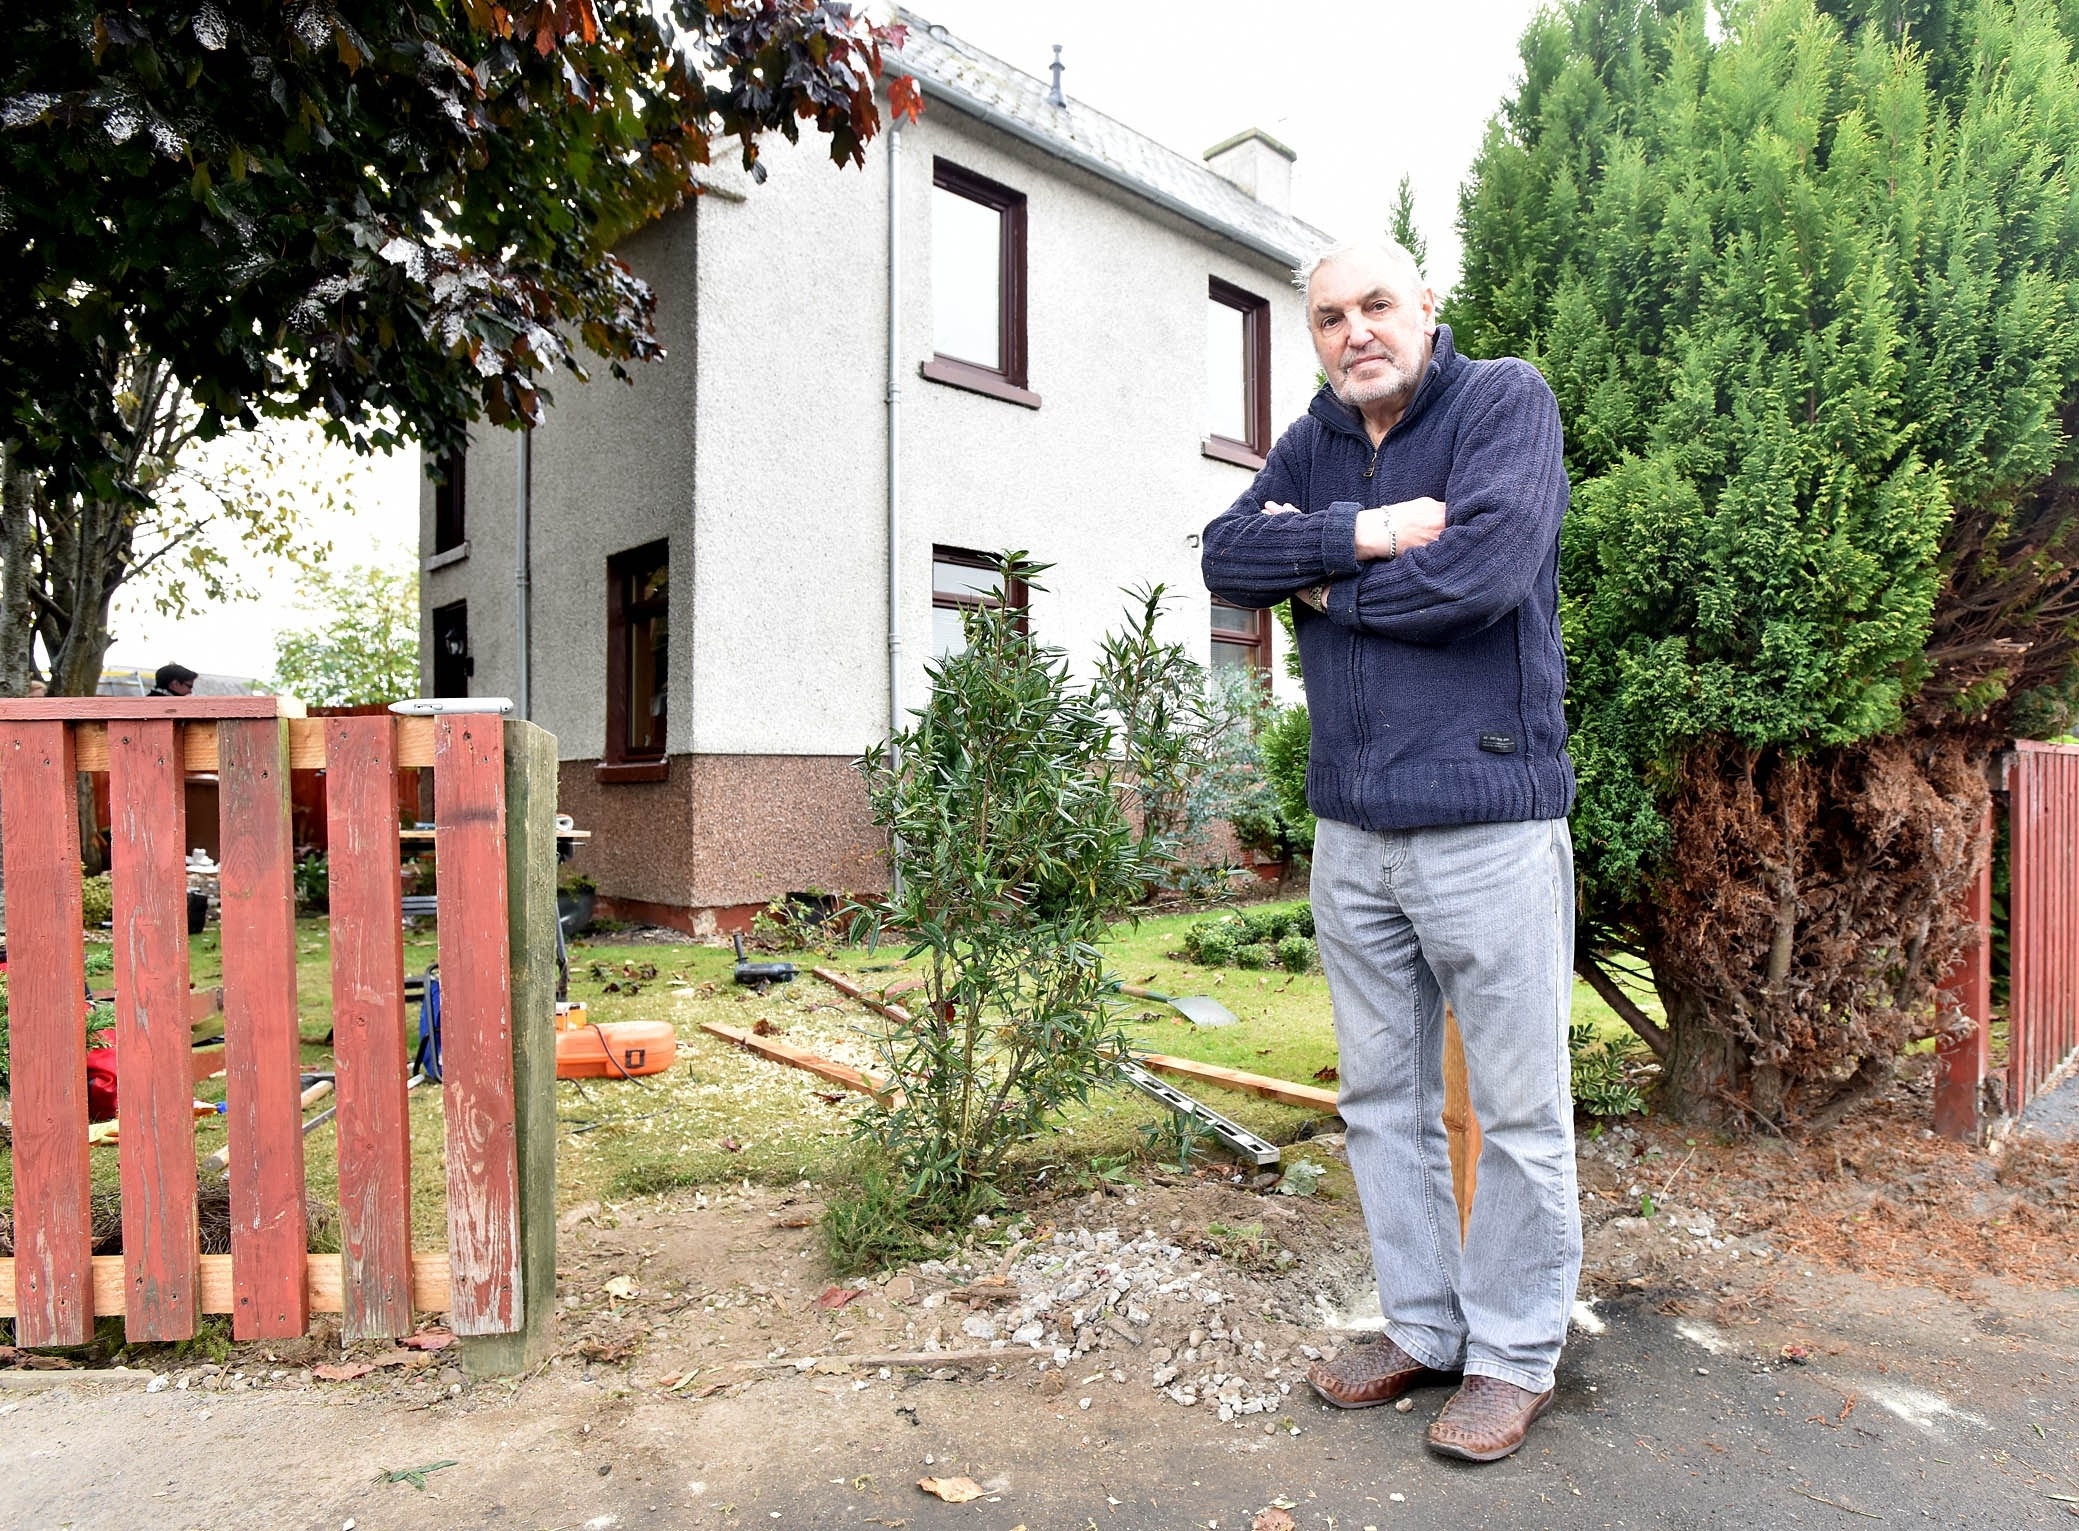 James Lawless at his garden where the van broke through the fence and entered his garden.